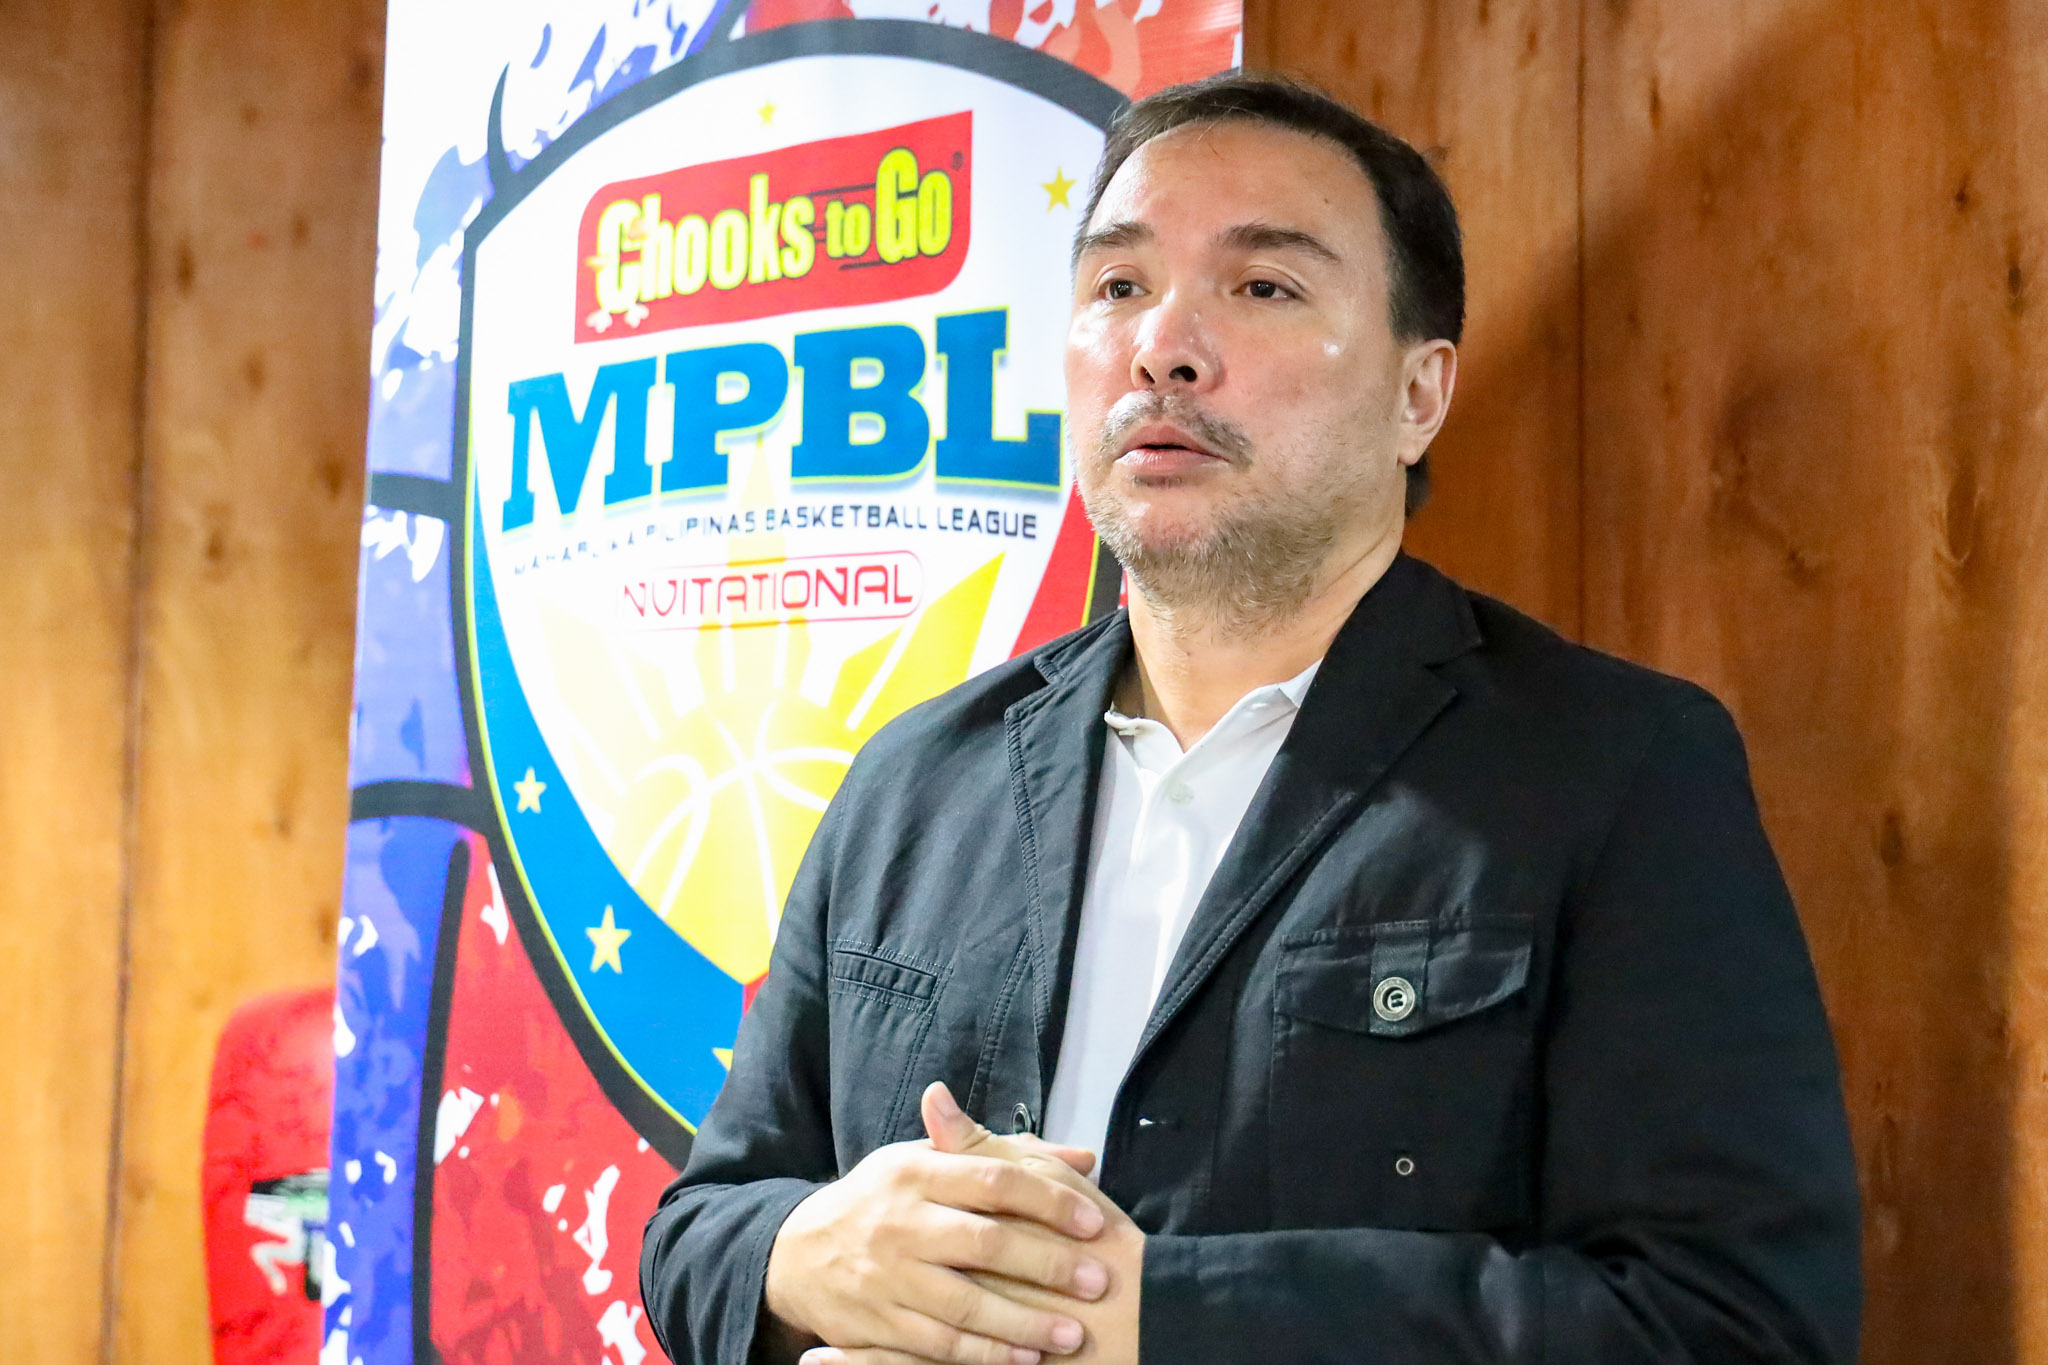 2021-Chooks-MPBL-Invitational-Baham-Mitra Chooks-to-Go MPBL officially turns pro Basketball MPBL News  - philippine sports news